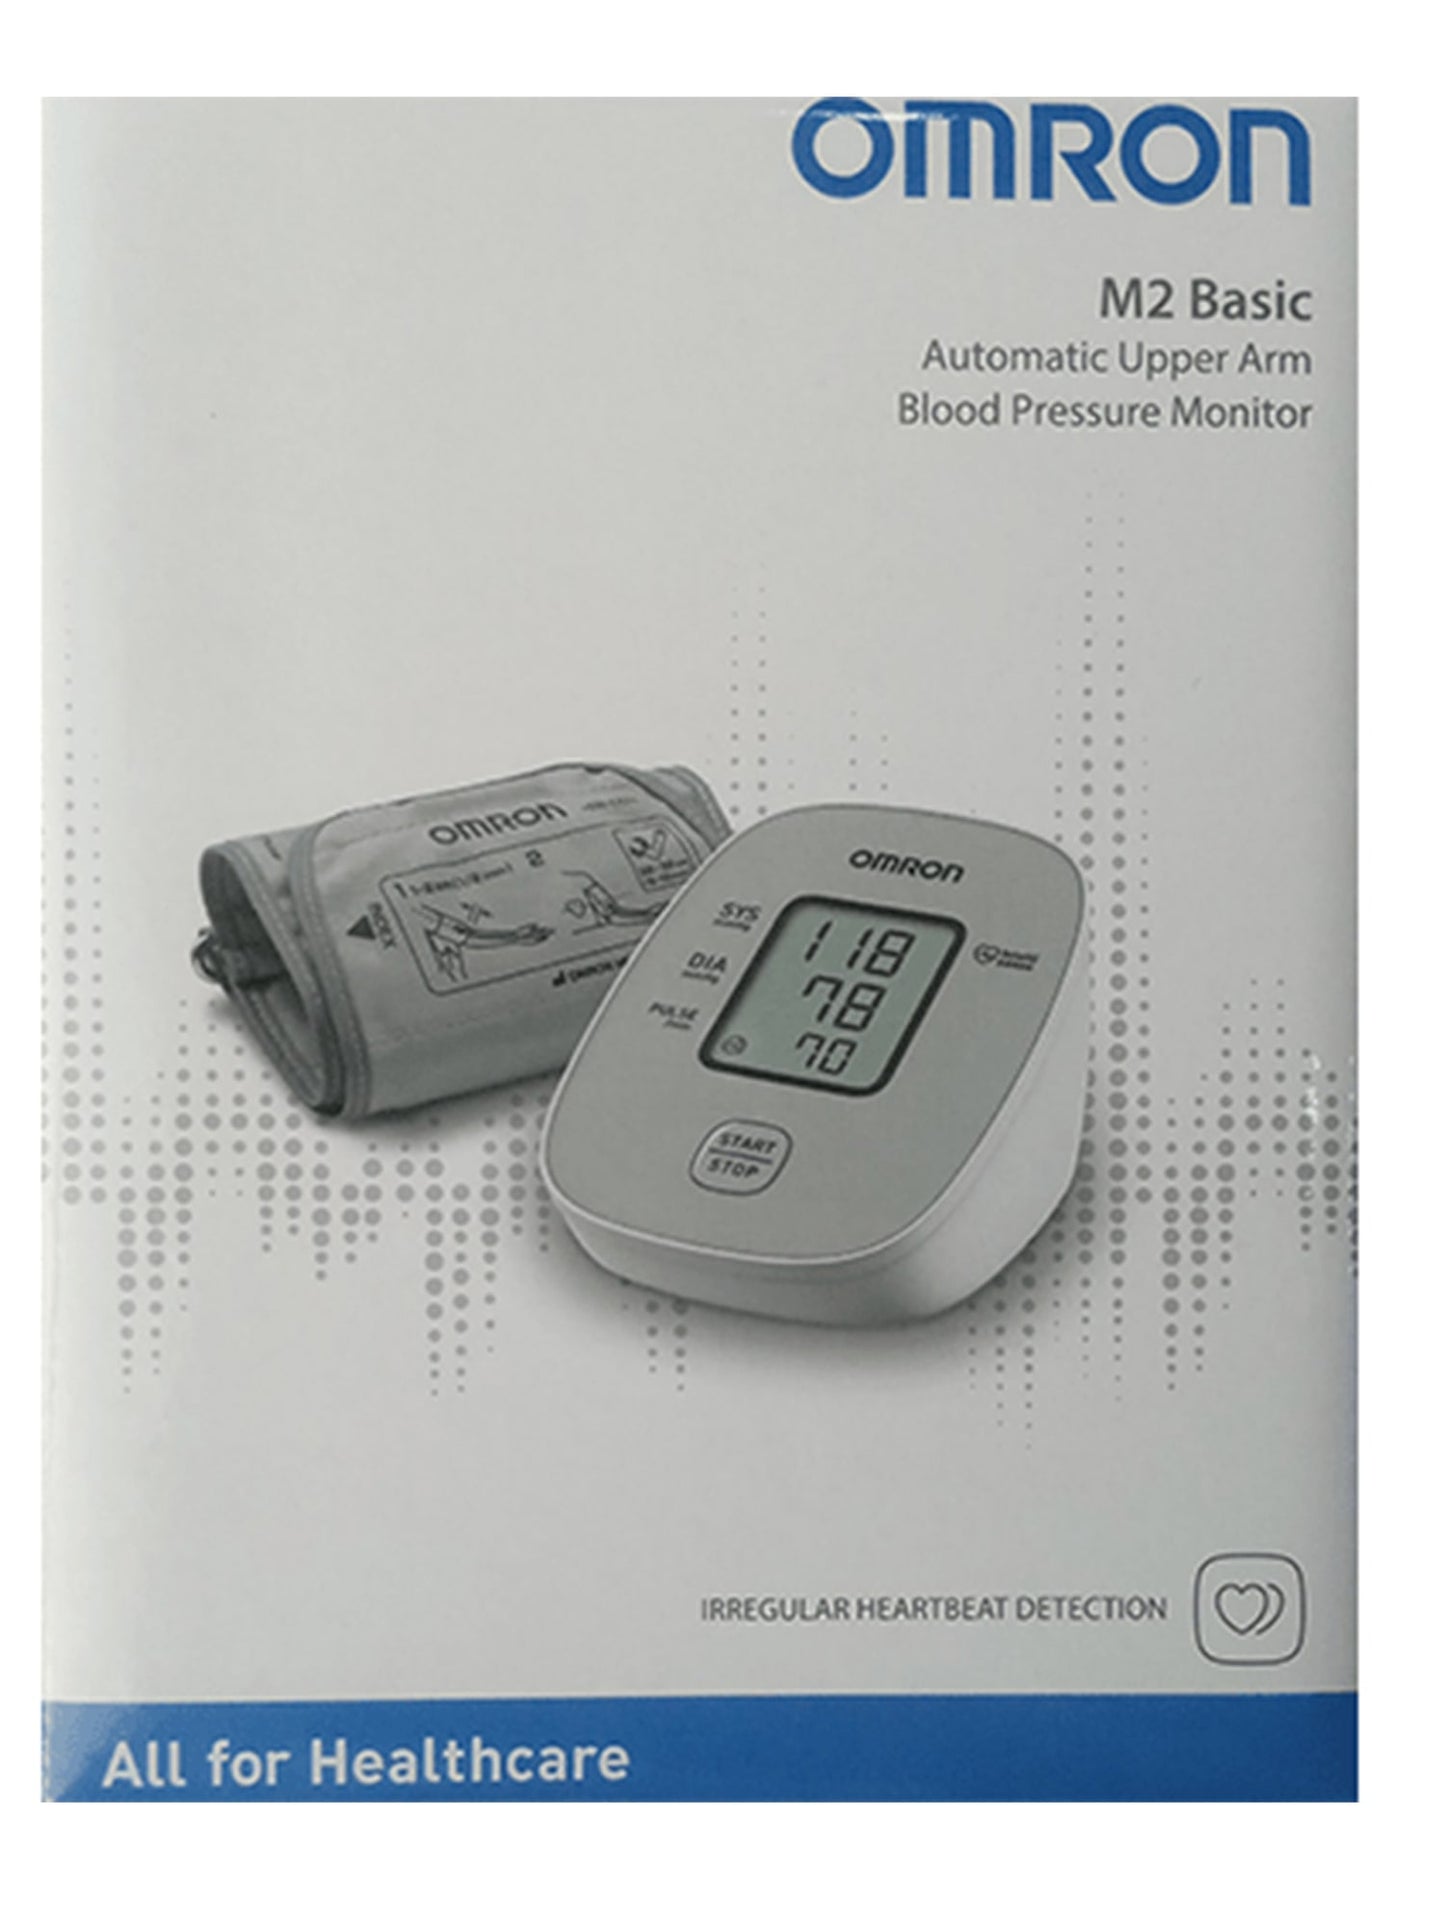 OMRON M2 BASIC AUTOMATIC UPPER ARM BLOOD PRESSURE MONITOR